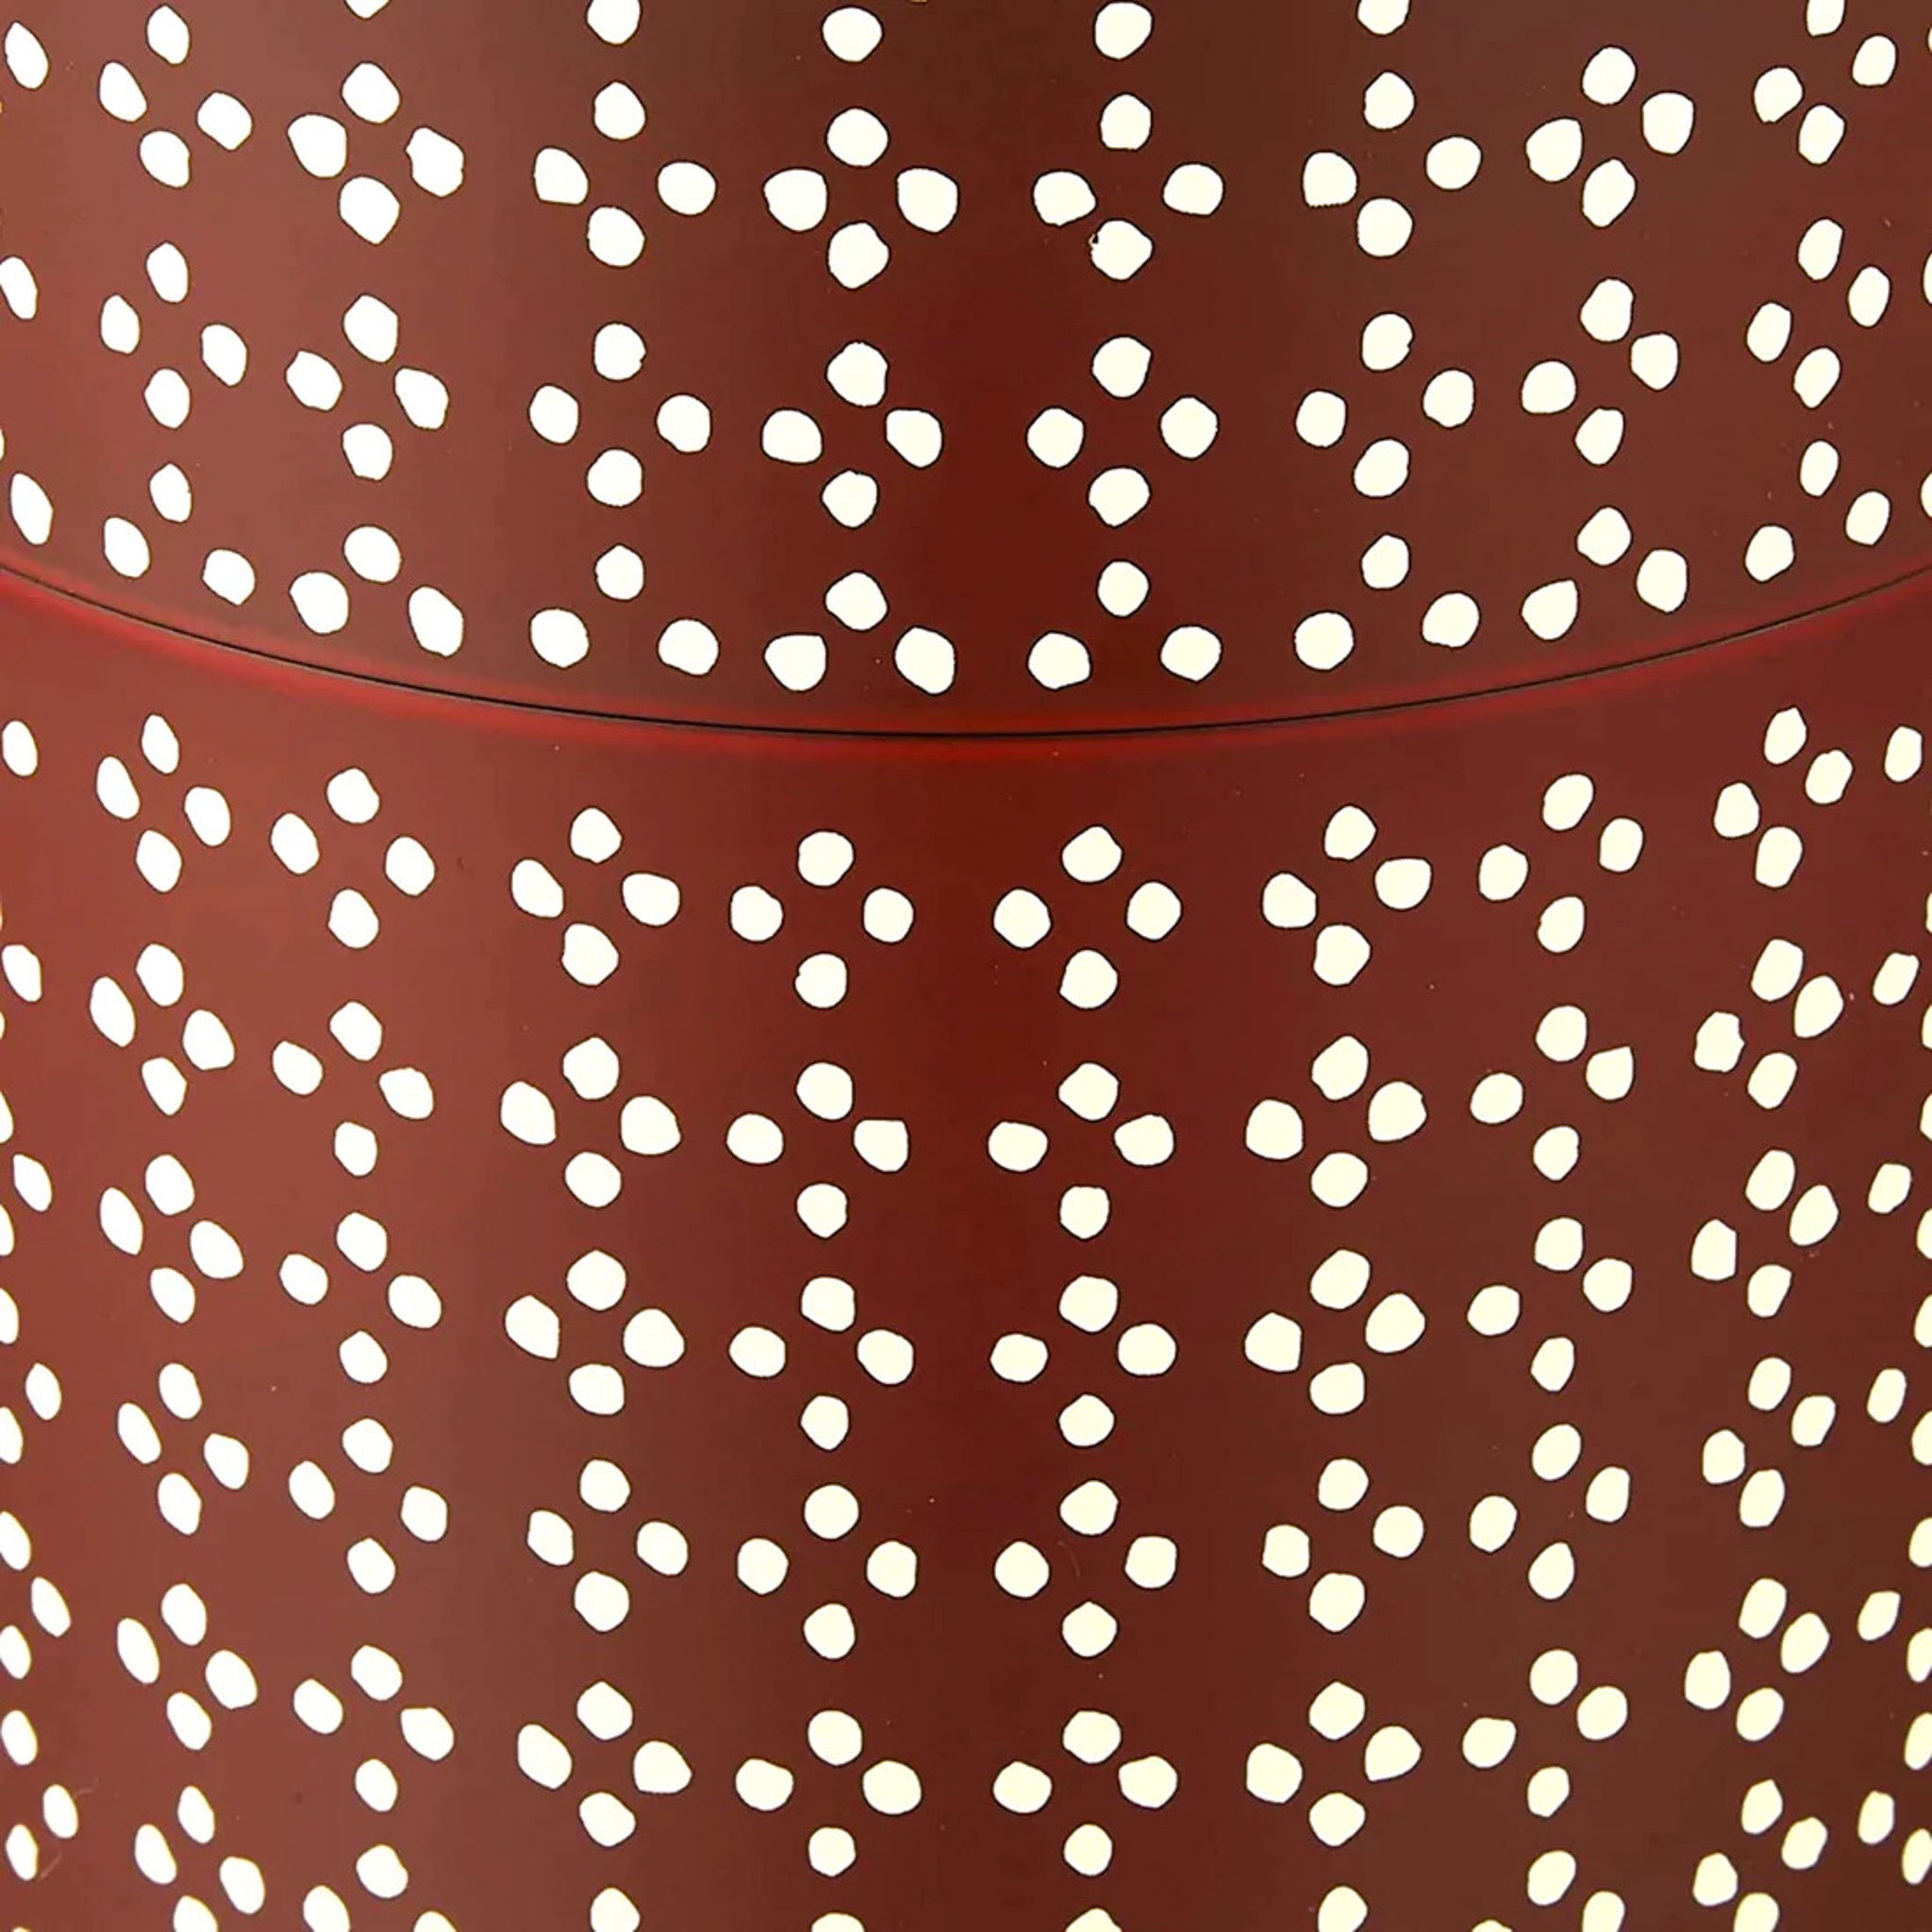 Red Pattern Fabric Tea Box, 650 ml